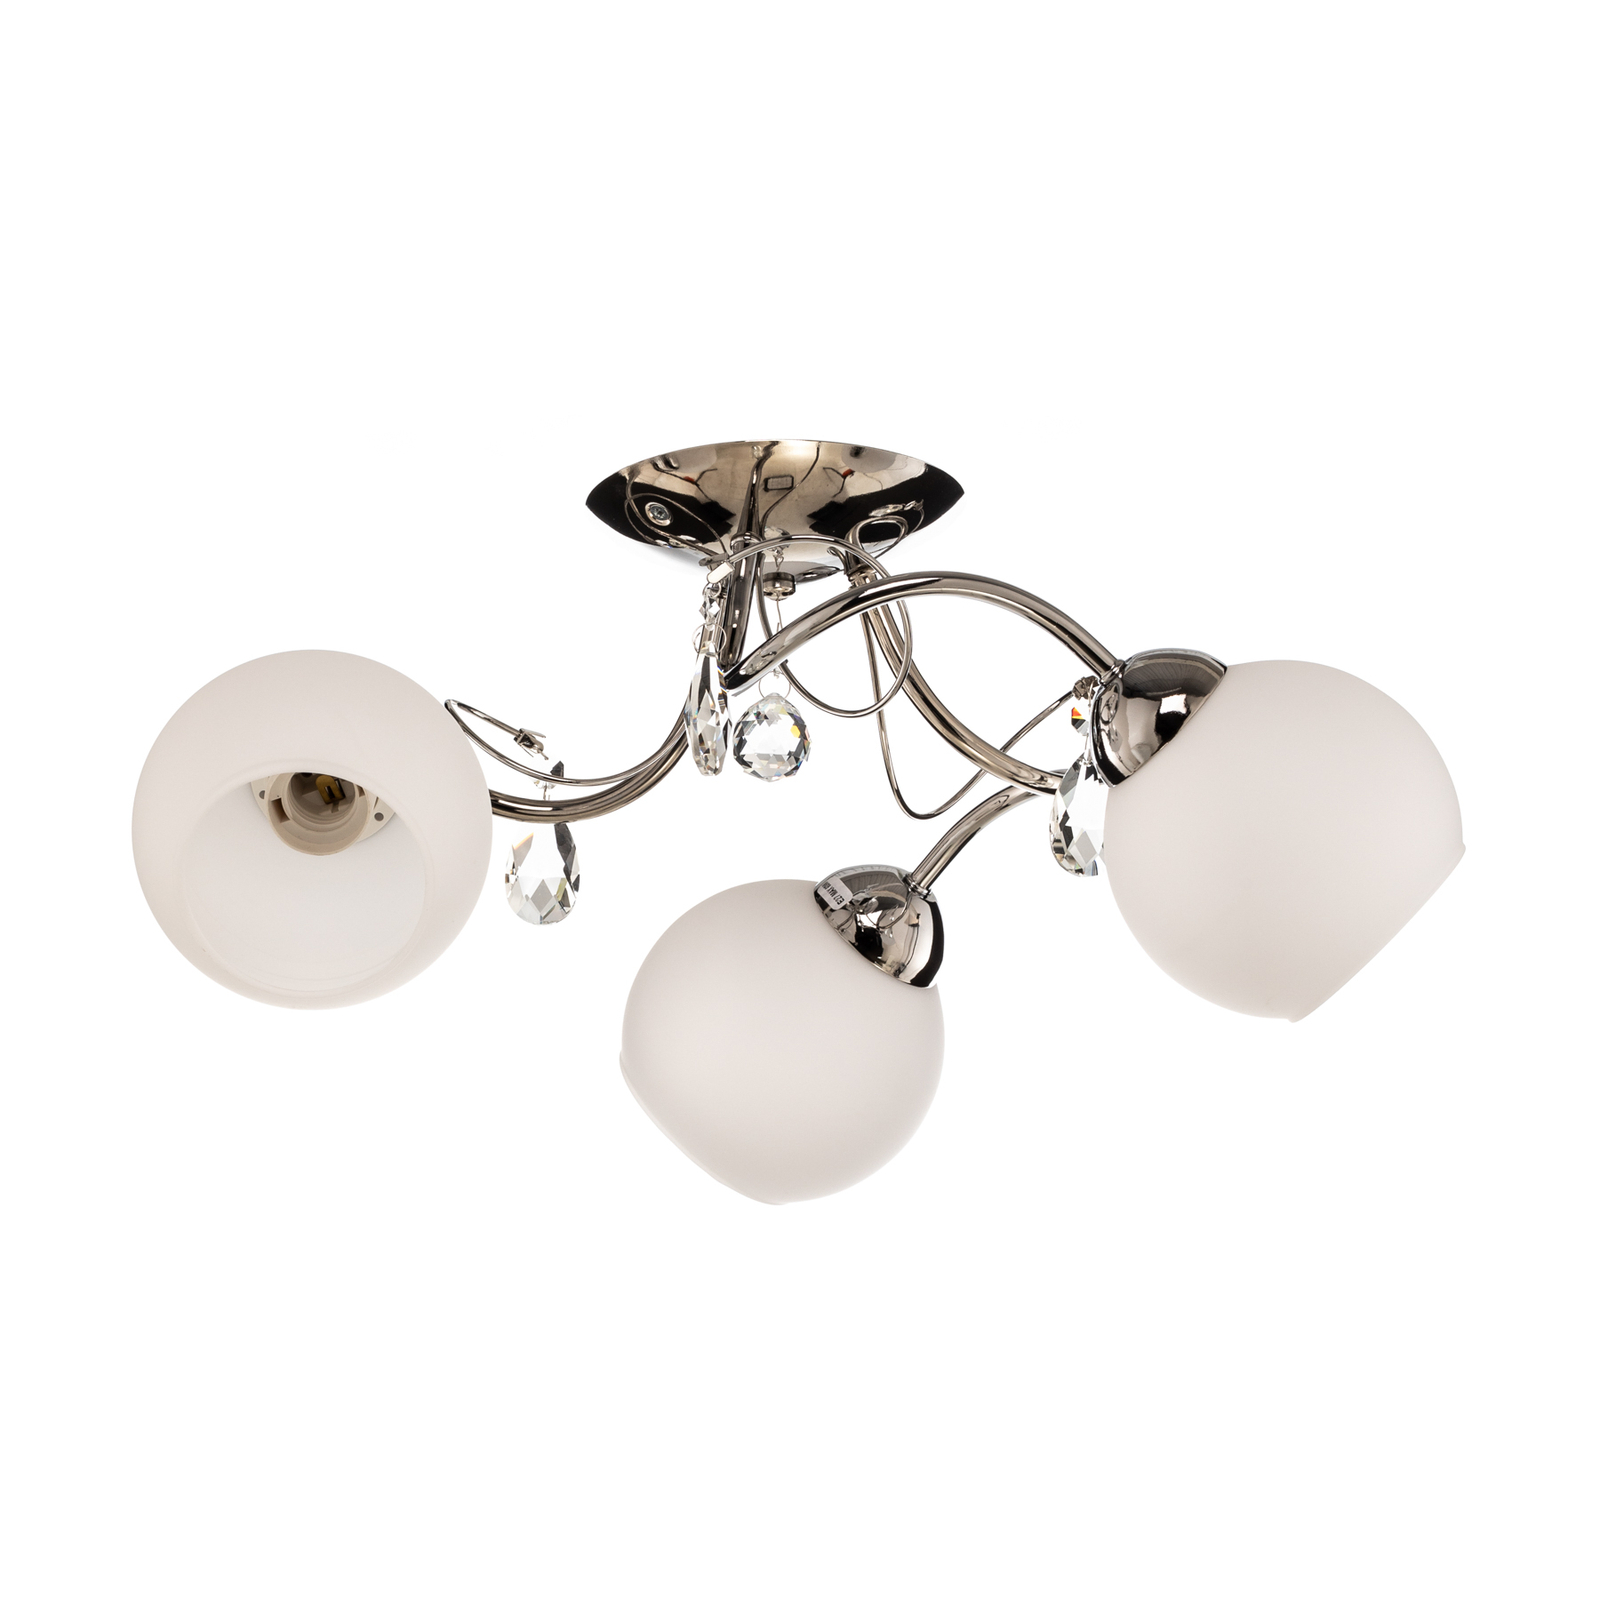 Livia Pro ceiling light, chrome/white, three-bulb